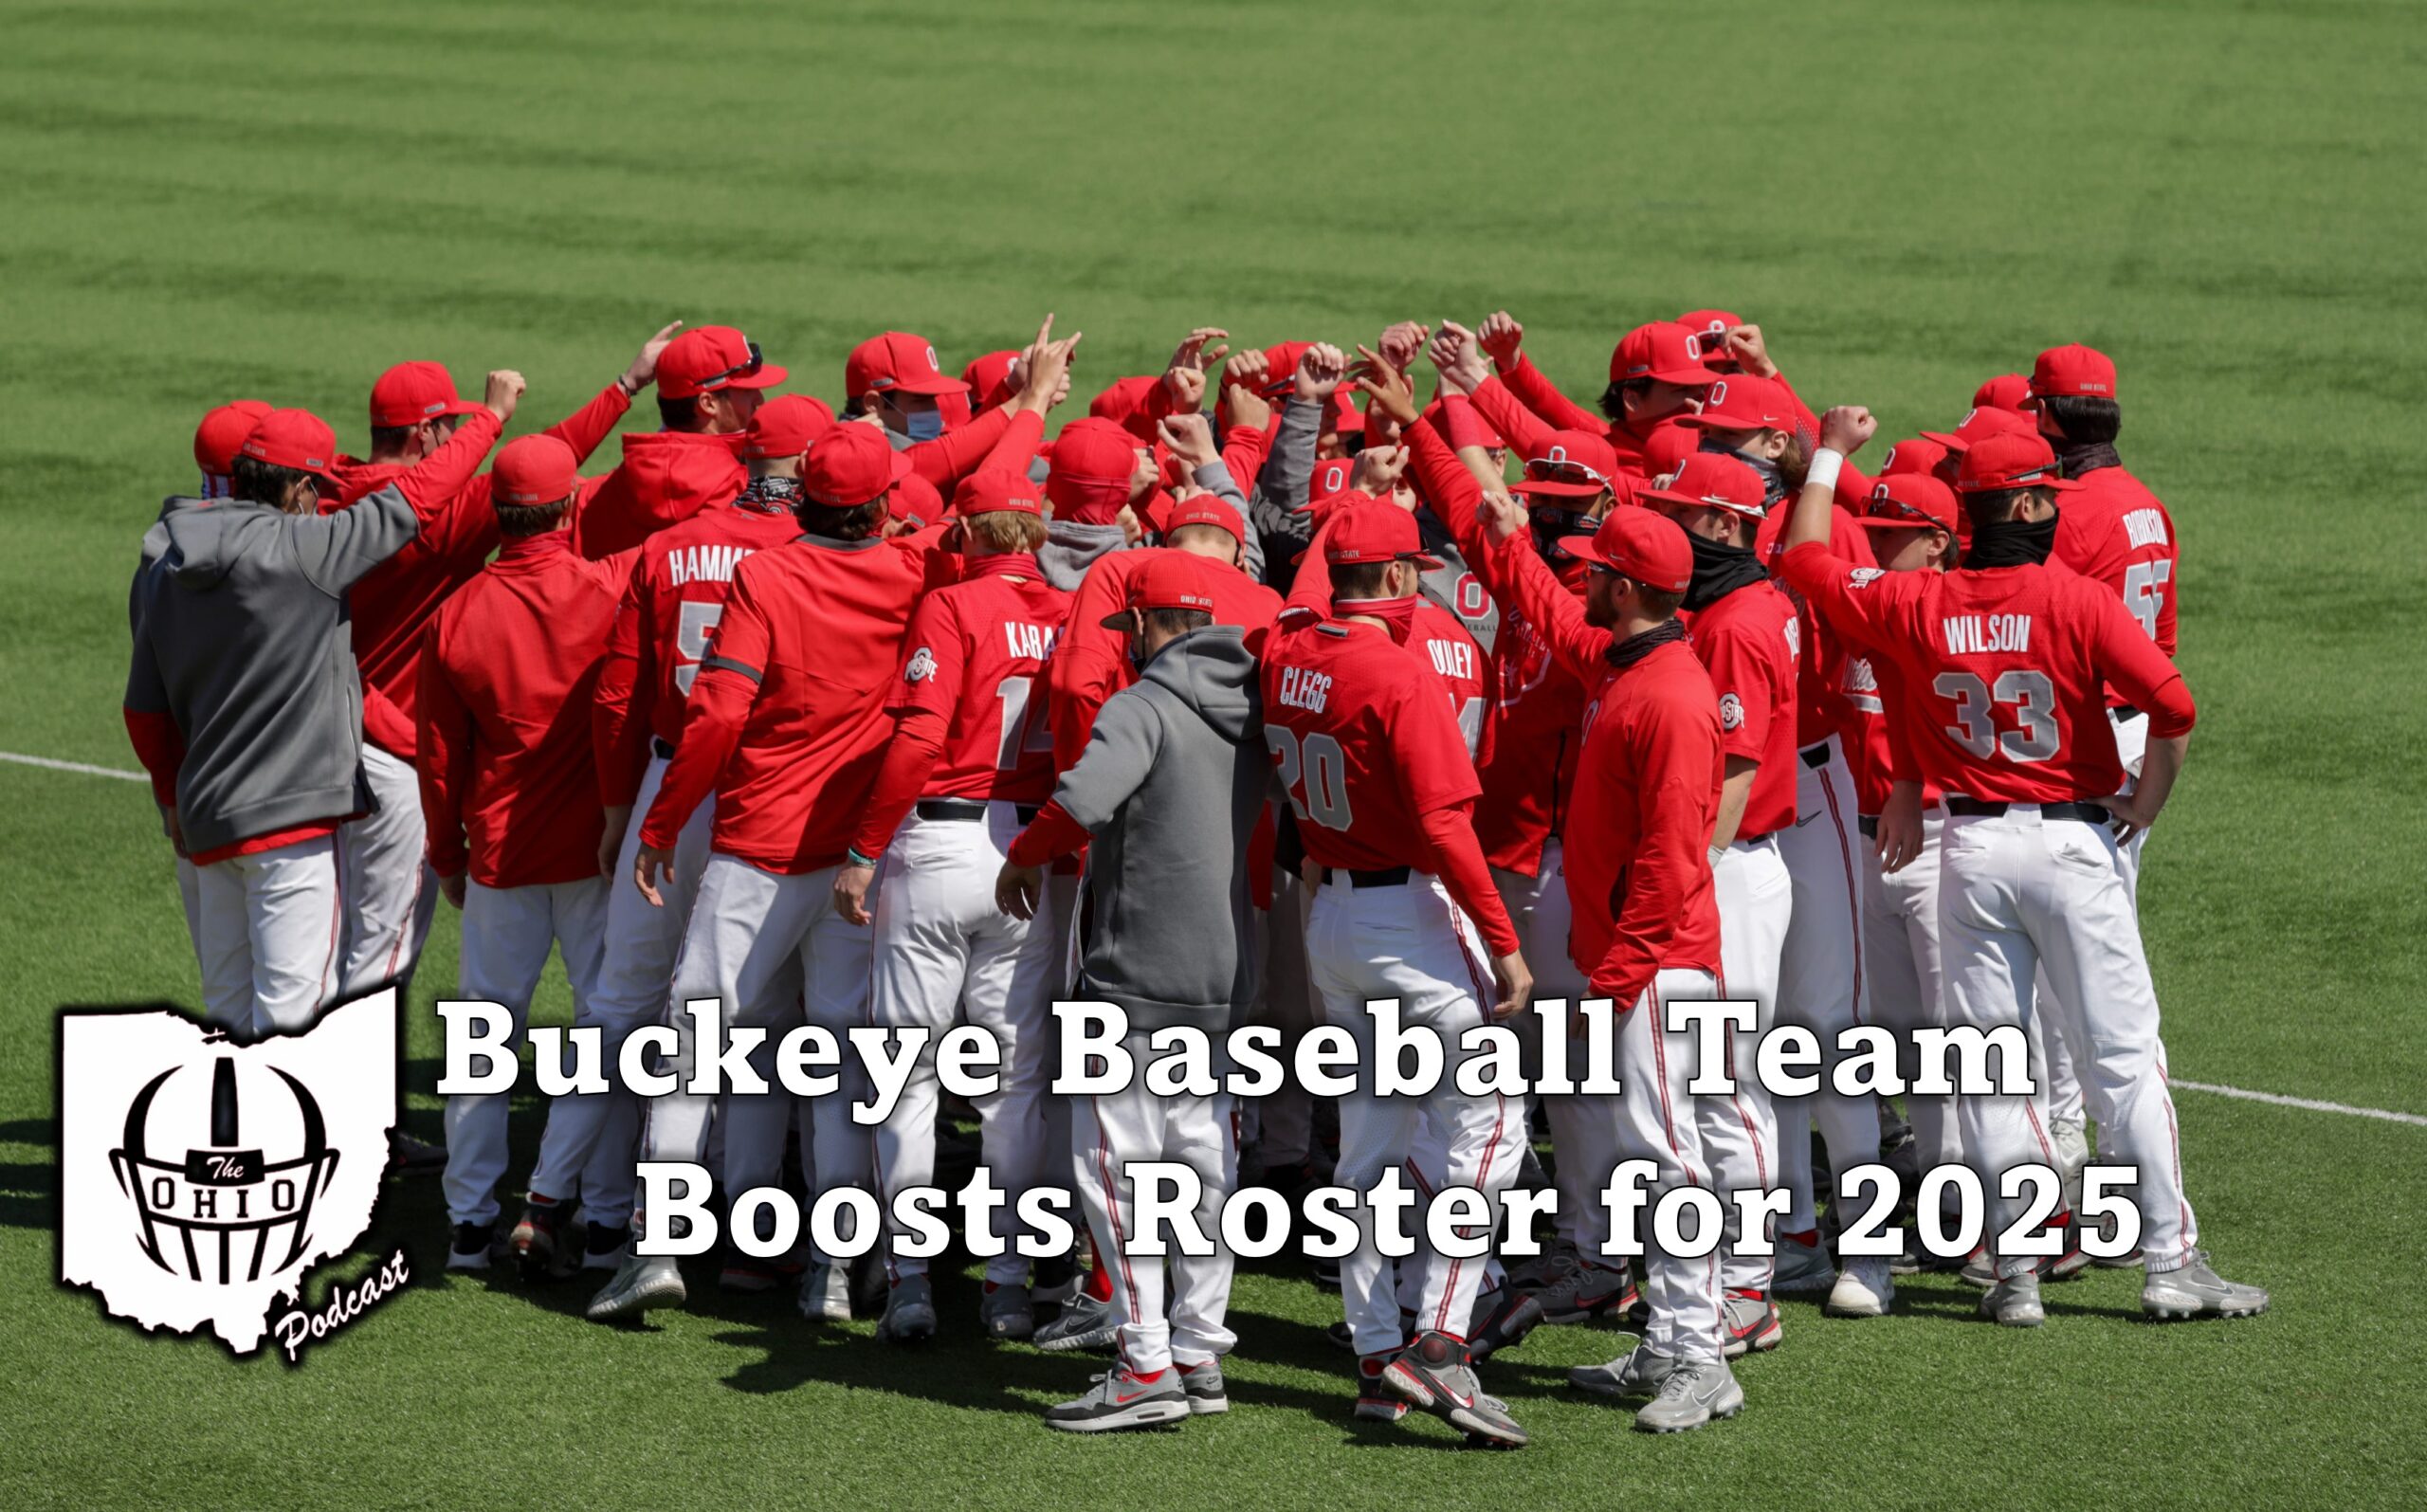 Buckeye Baseball Team Boosts Roster for 2025.